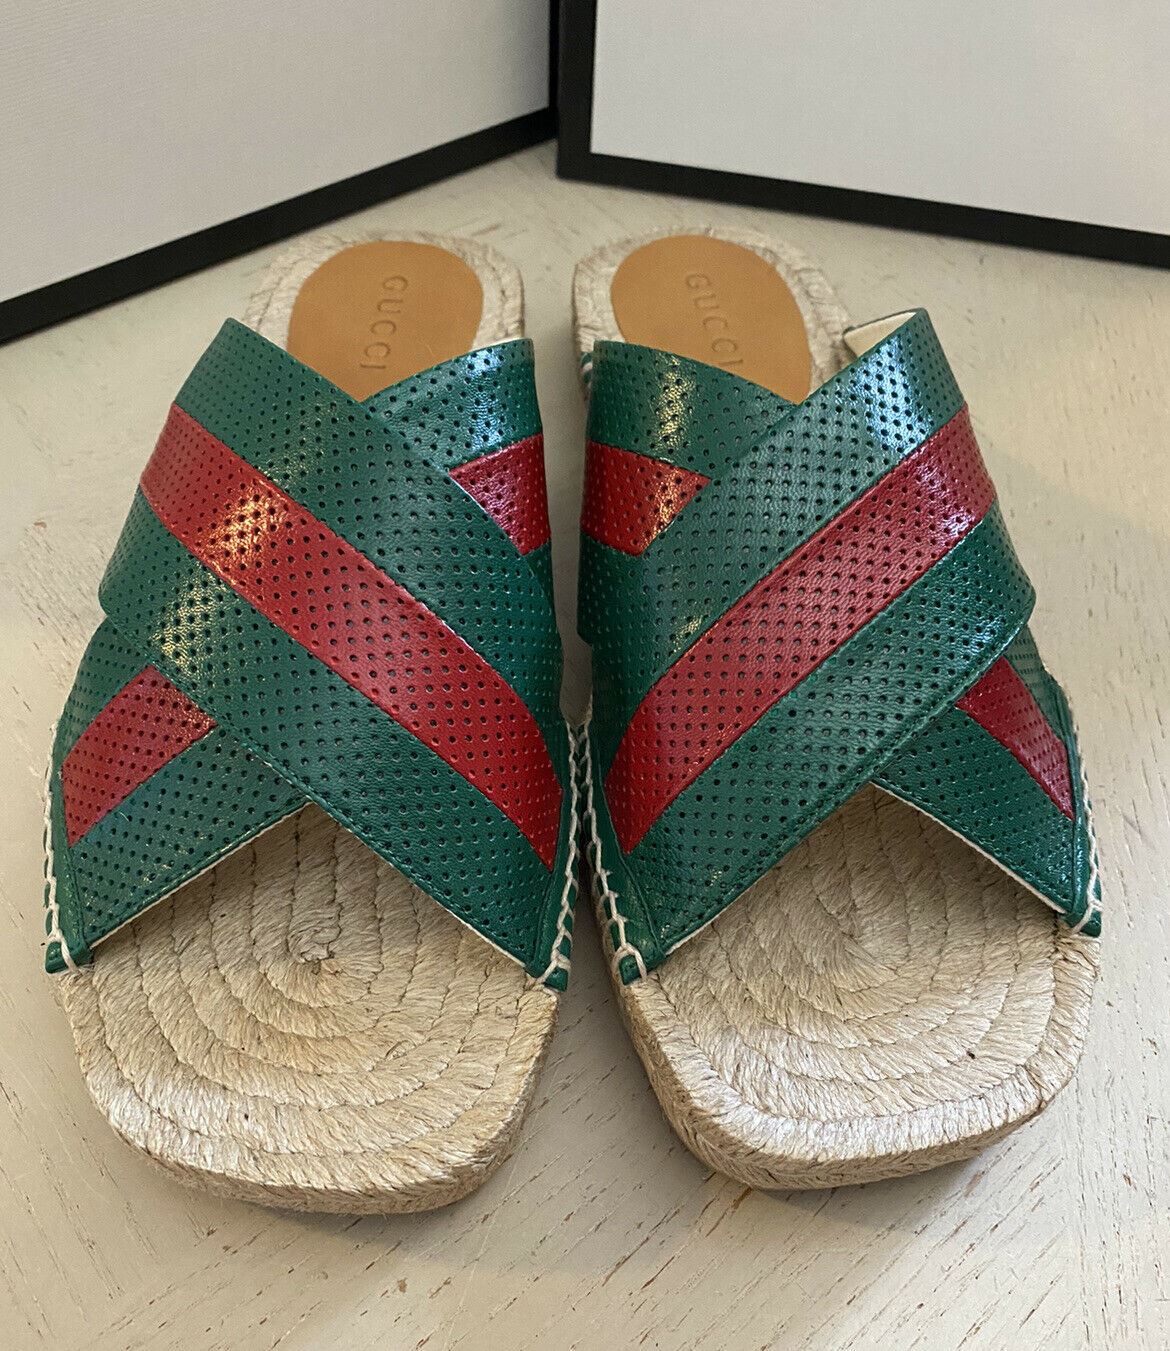 NIB Gucci Mens Sandal Espadrille Shoes Green/Red 9 US/8 UK